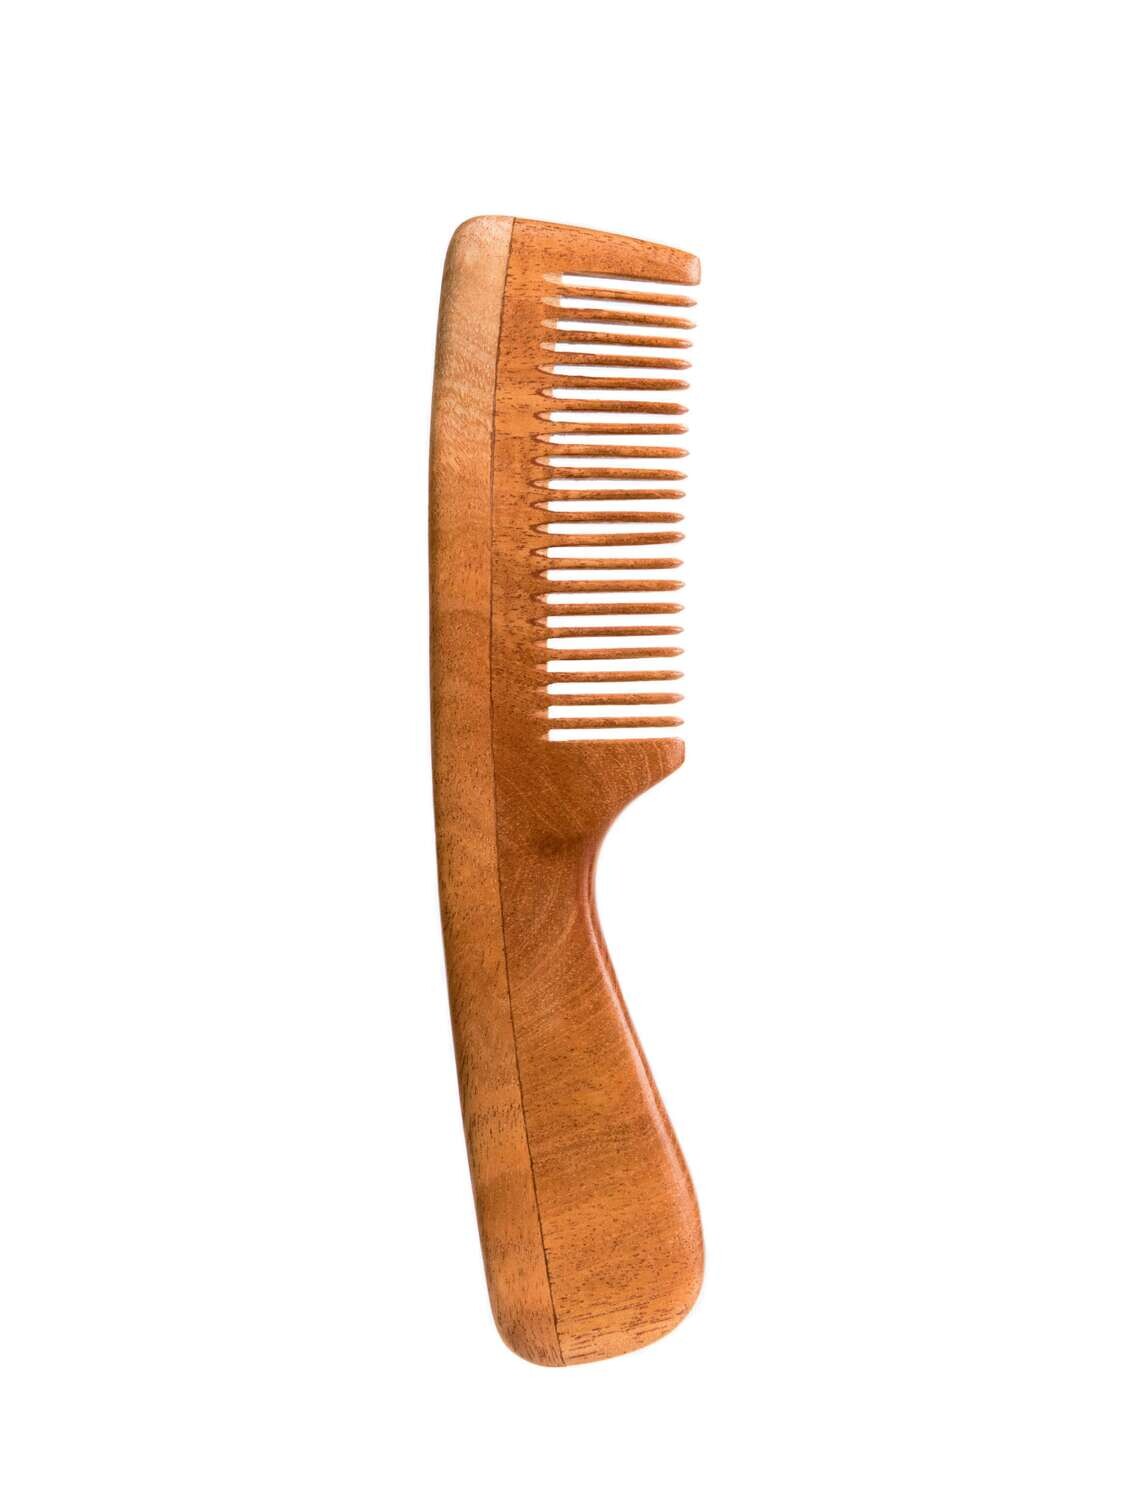 Clean Planeterra Pure Neem Wood Hair Comb